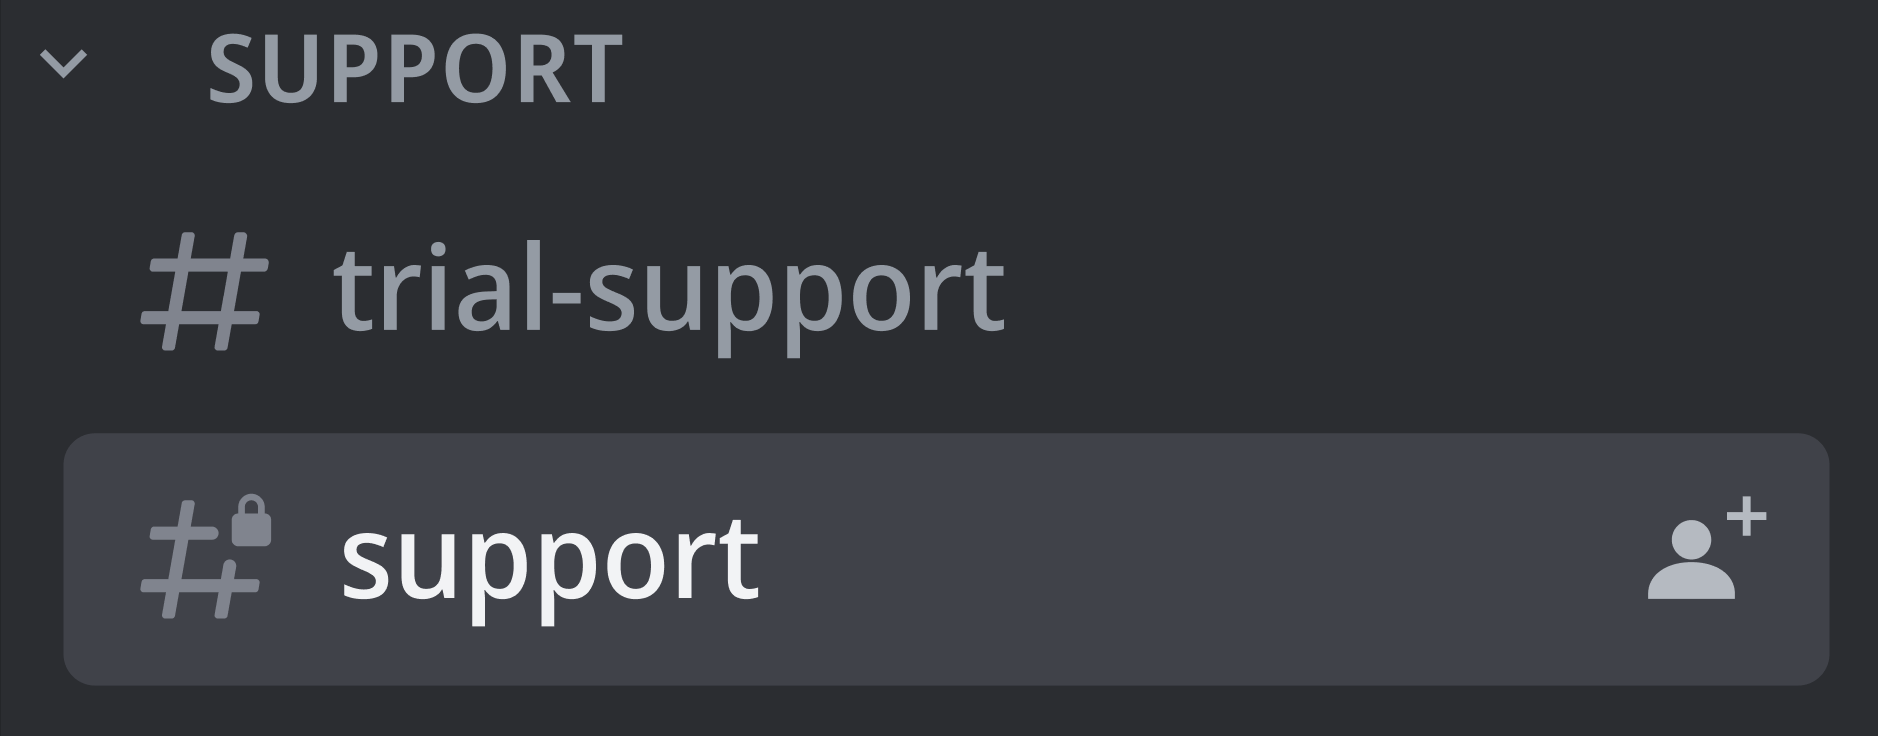 member-support